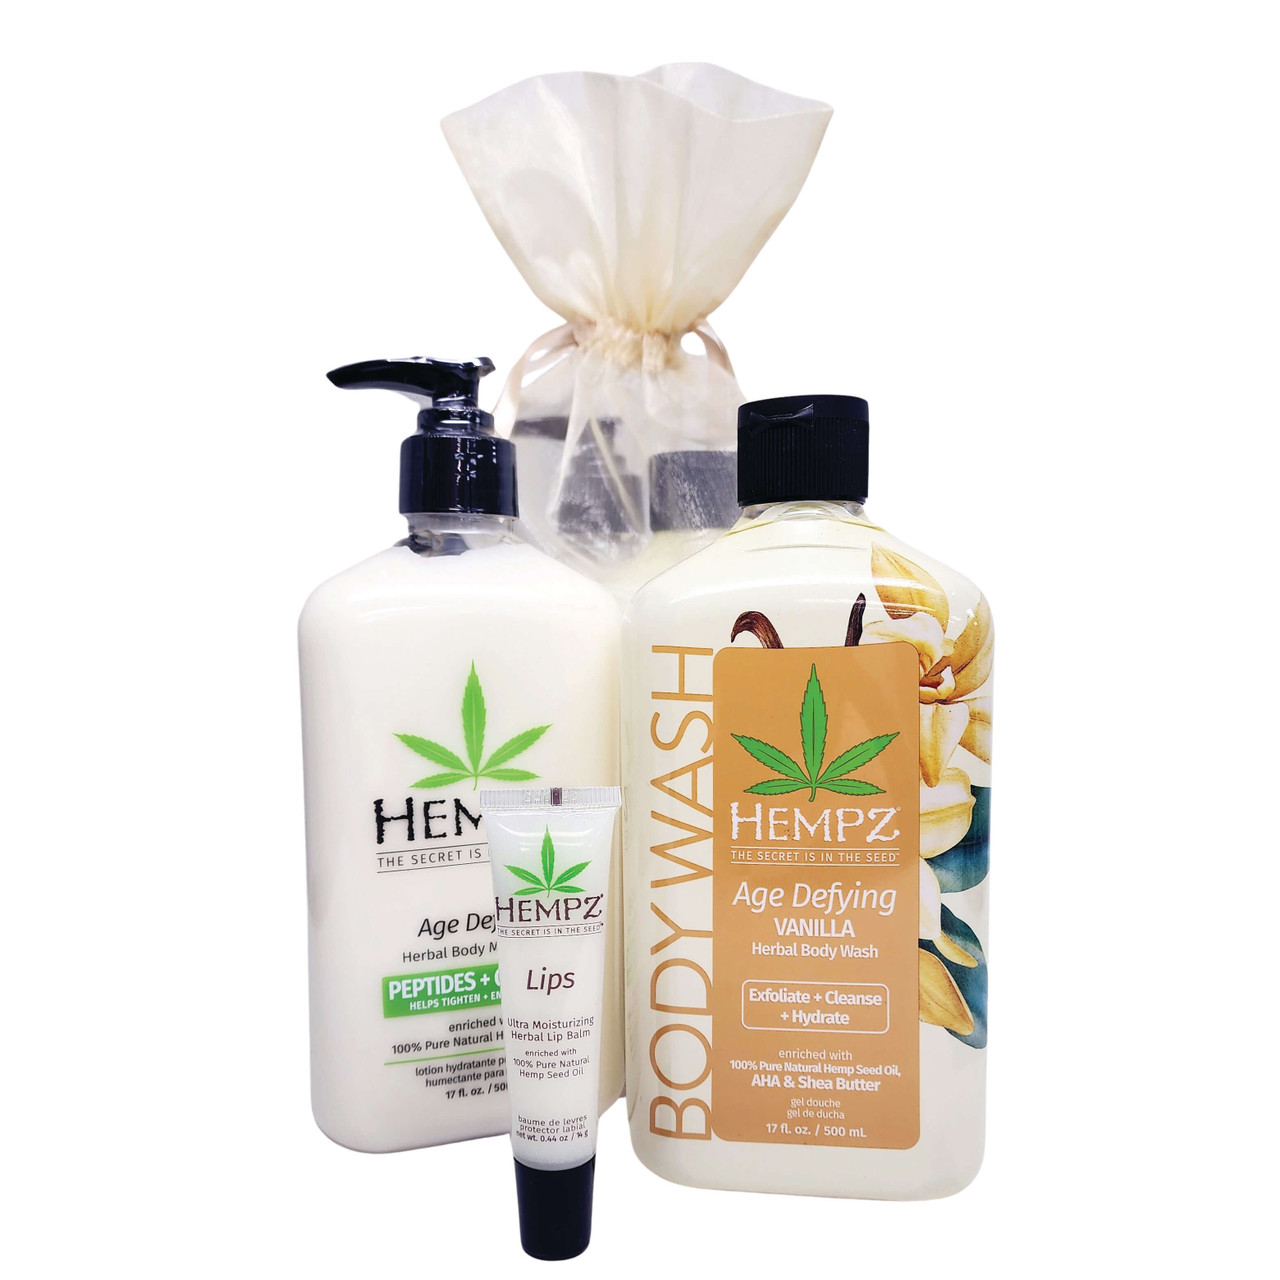 Hempz AGE DEFYING Herbal BATH & BODY GIFT SET - 3 pc